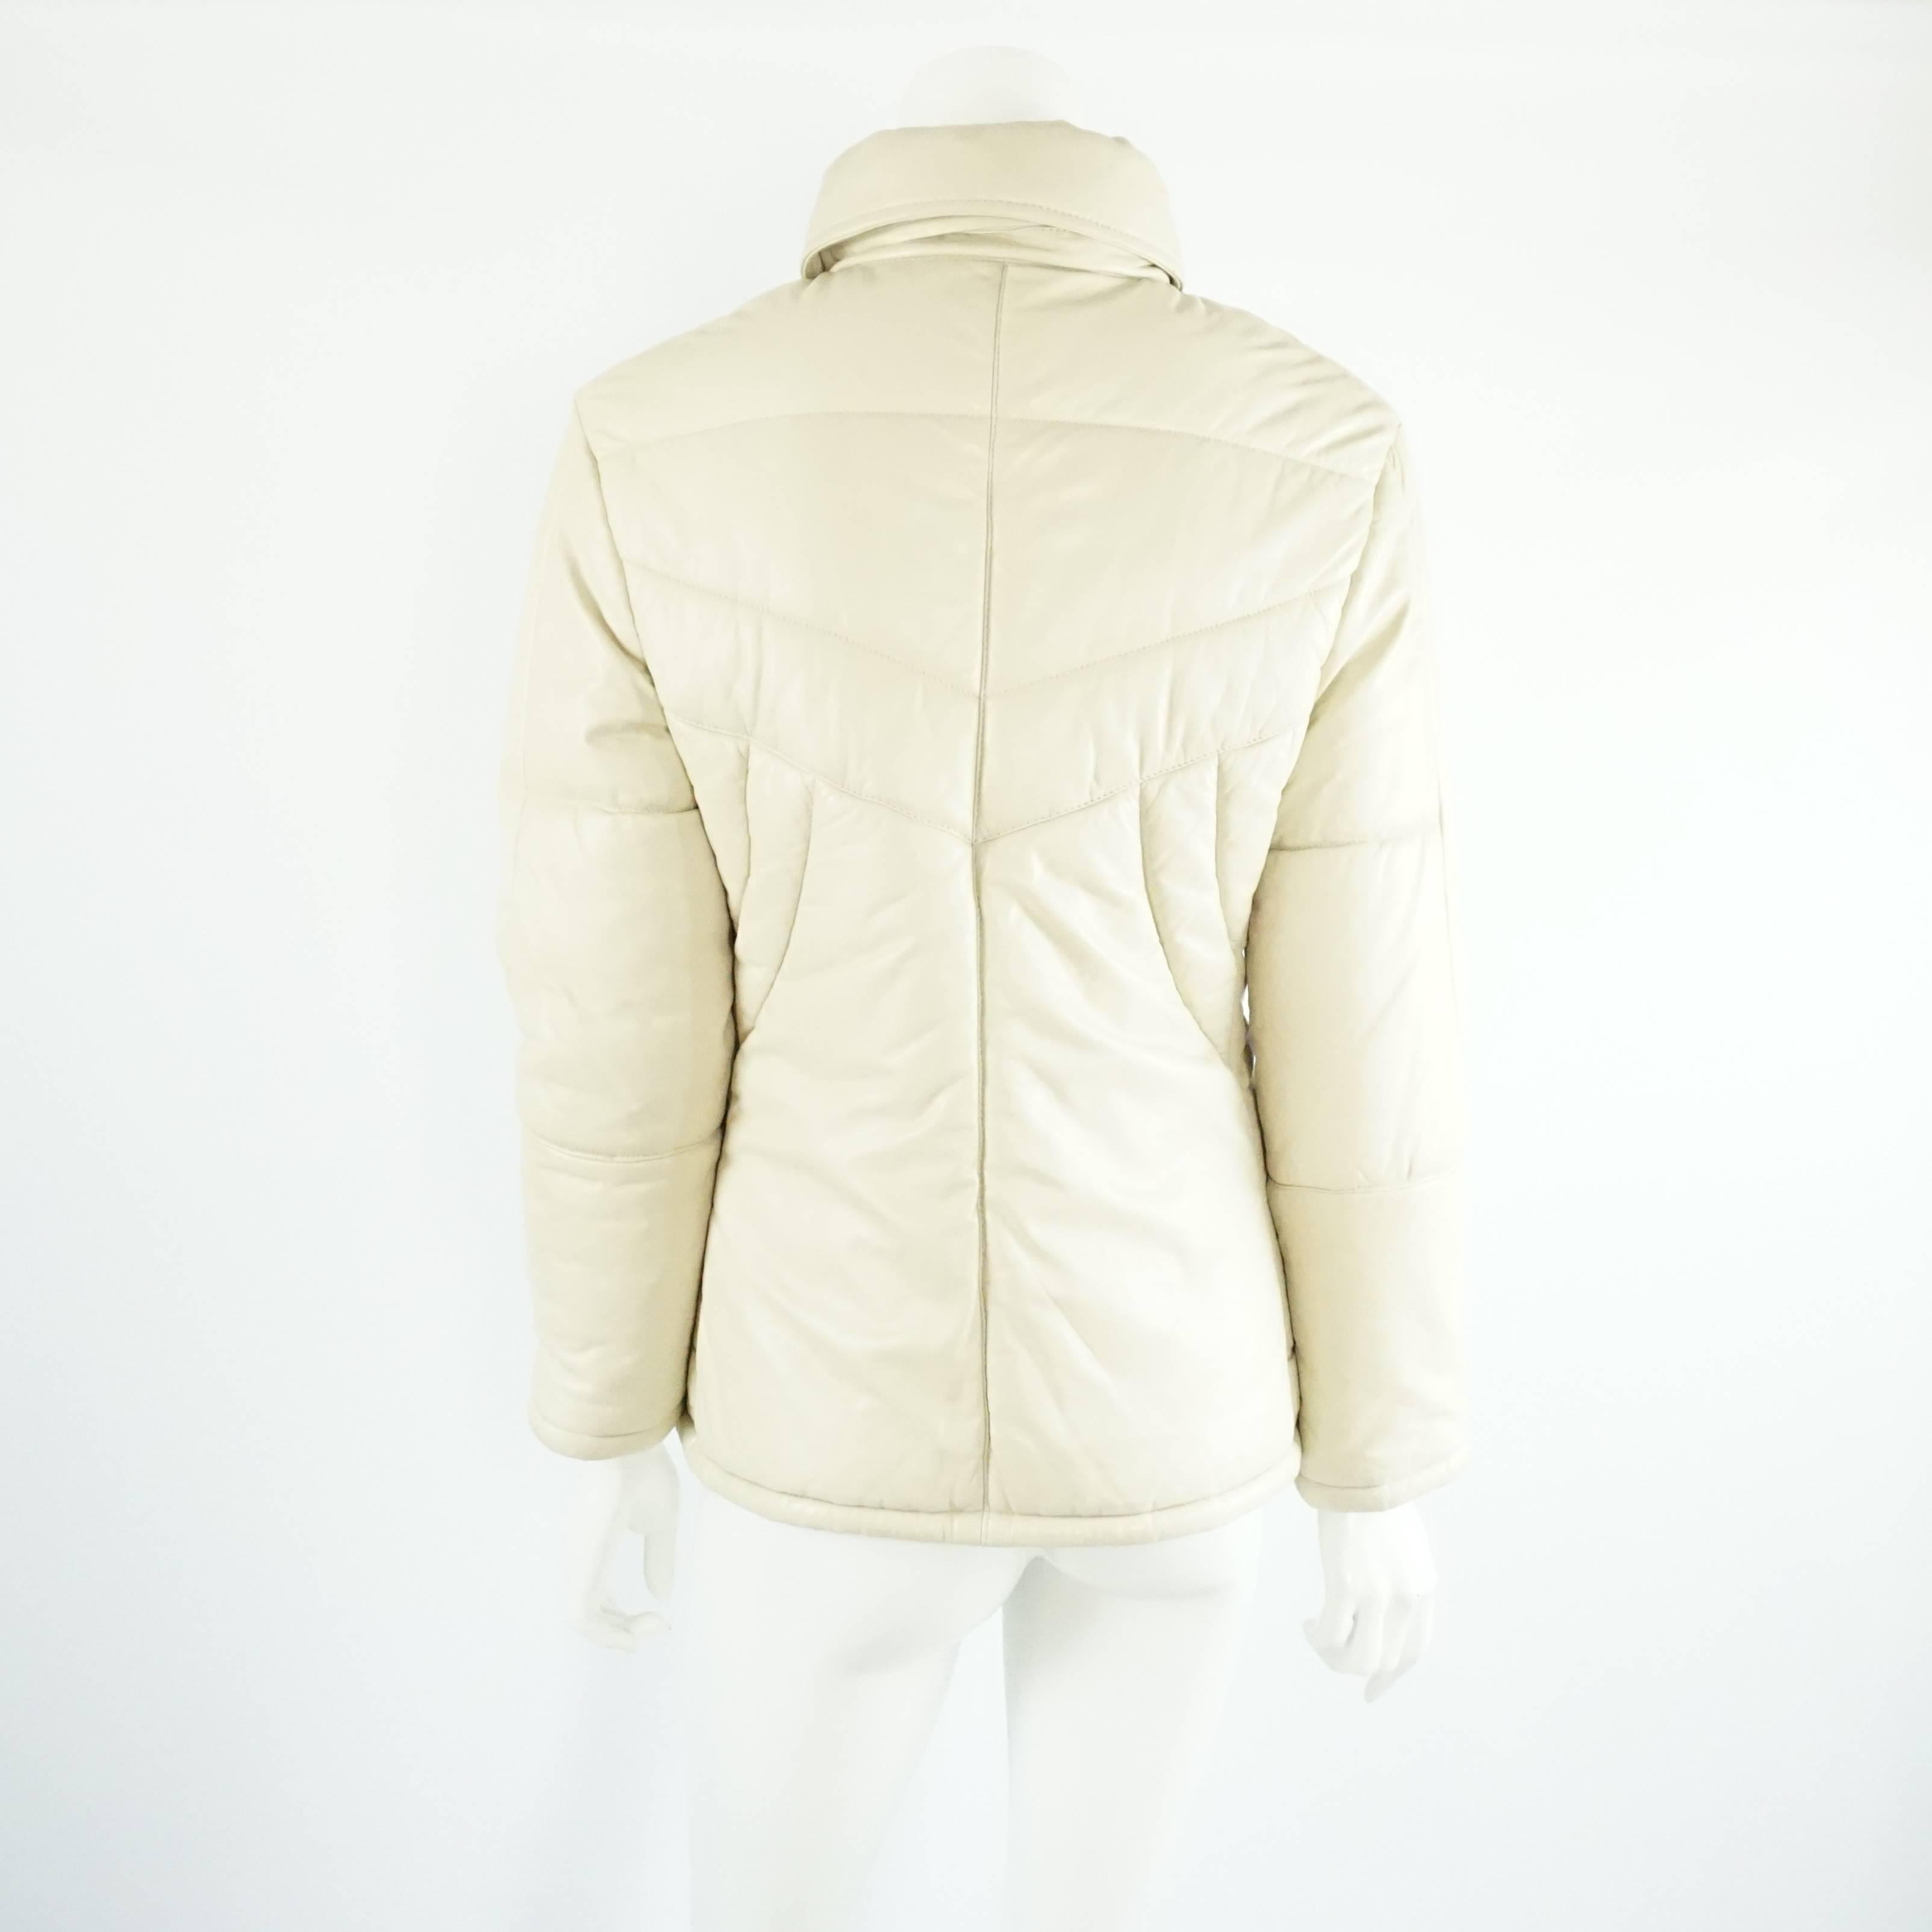 Beige Gucci Bone Leather Puffer Jacket with Hood - 46